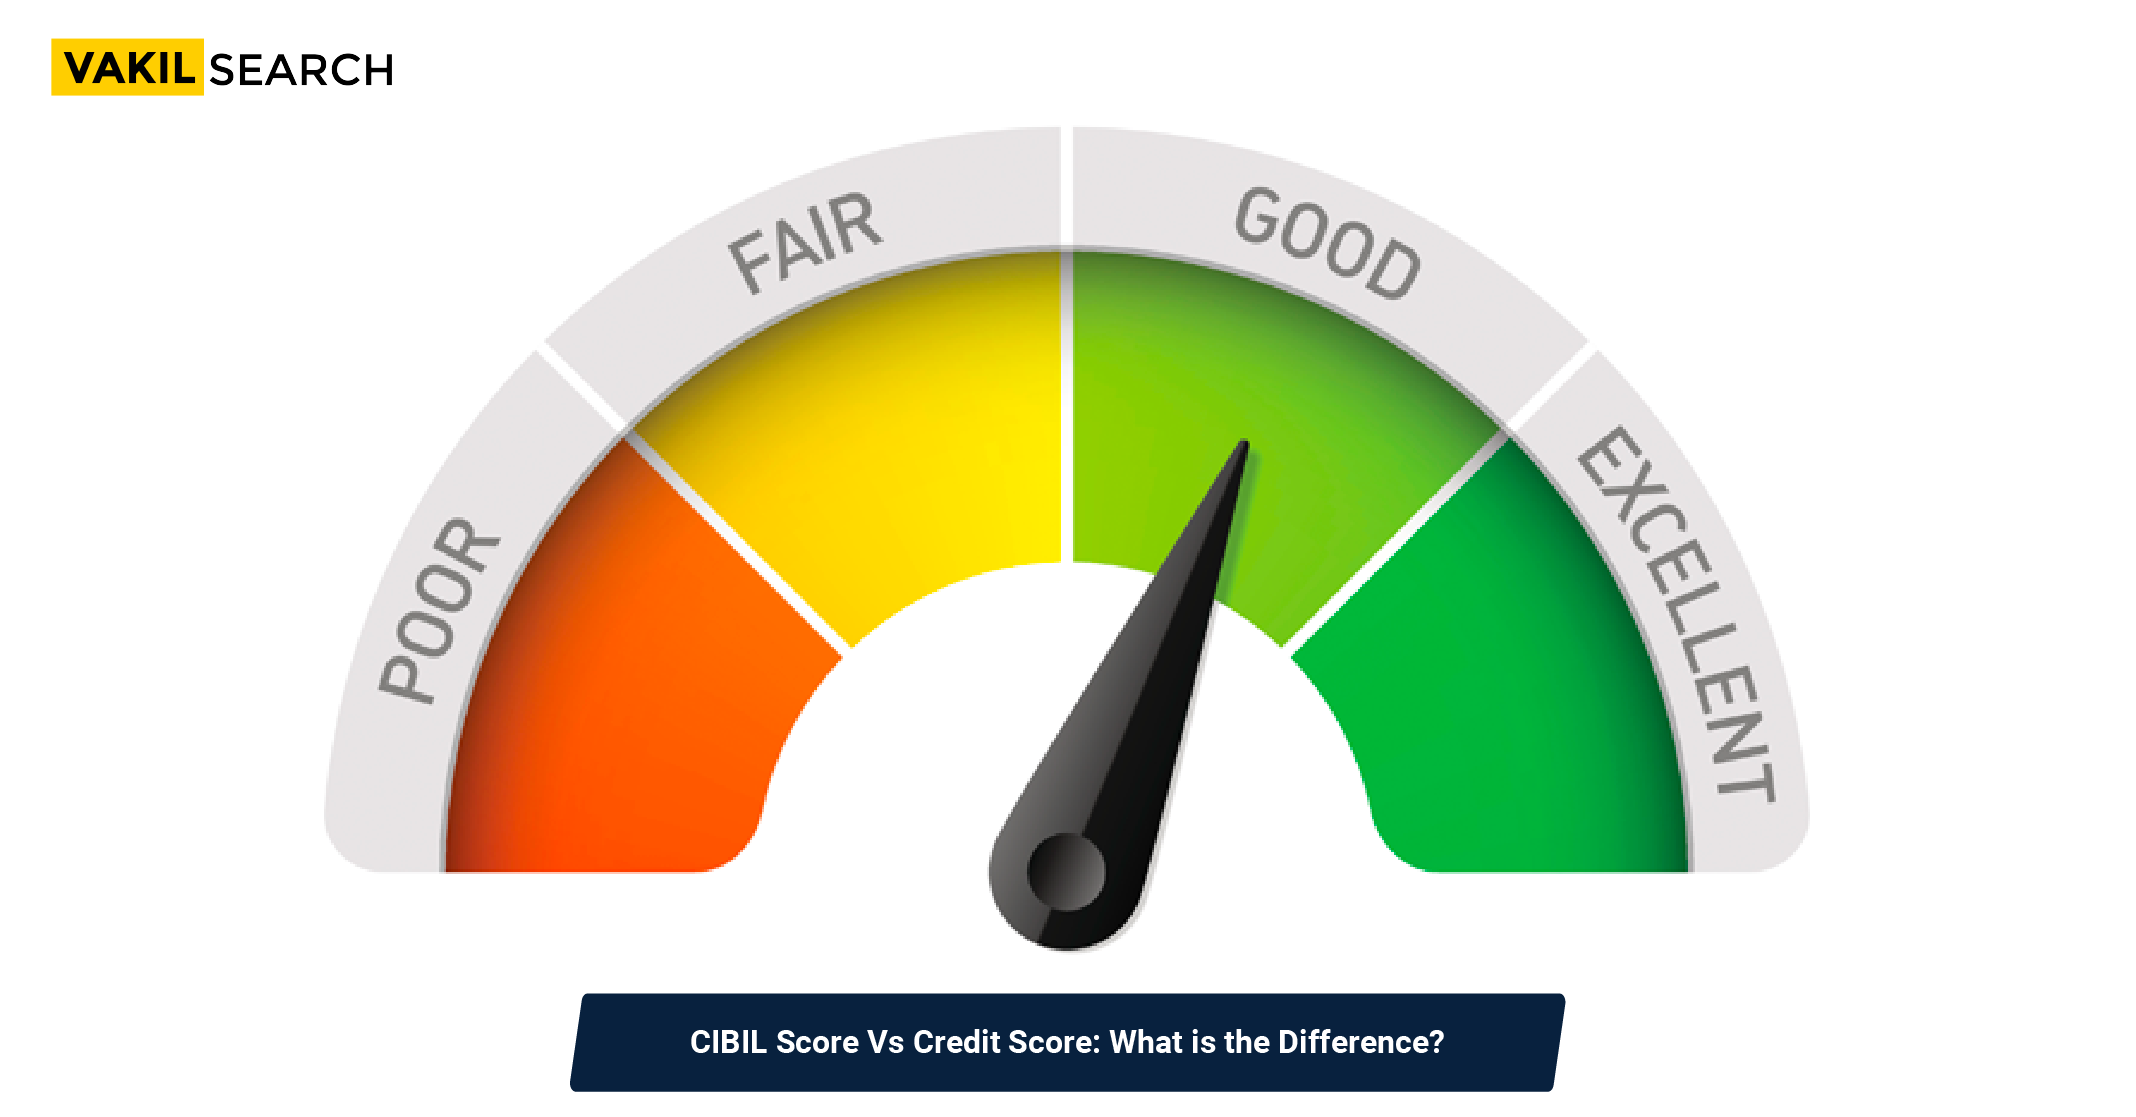 7 key advantages of having a high credit score